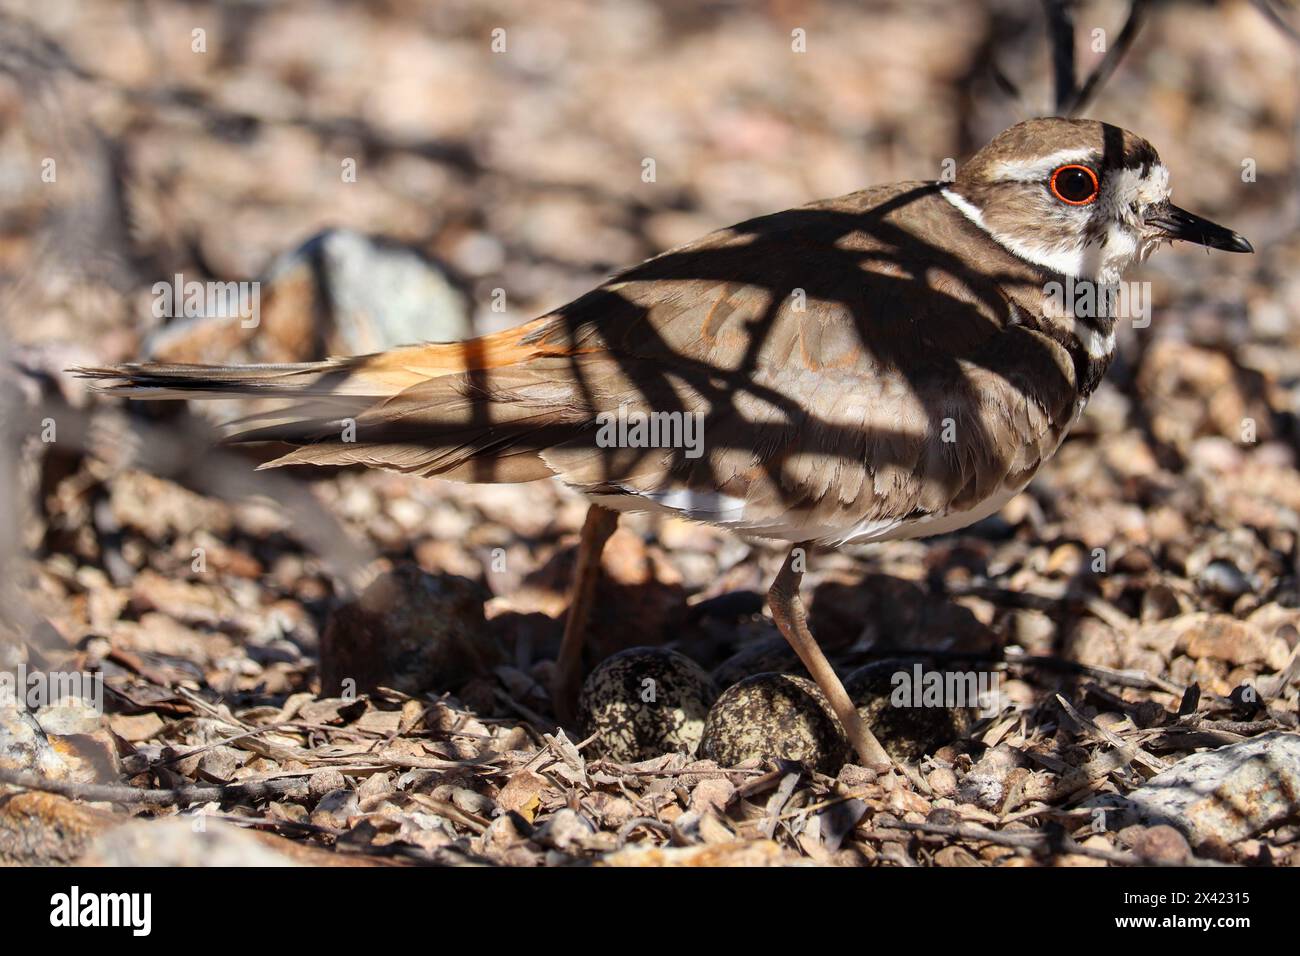 Nesting killdeer or Charadrius vociferus standing over her eggs at the Riparian water ranch in Arizona. Stock Photo